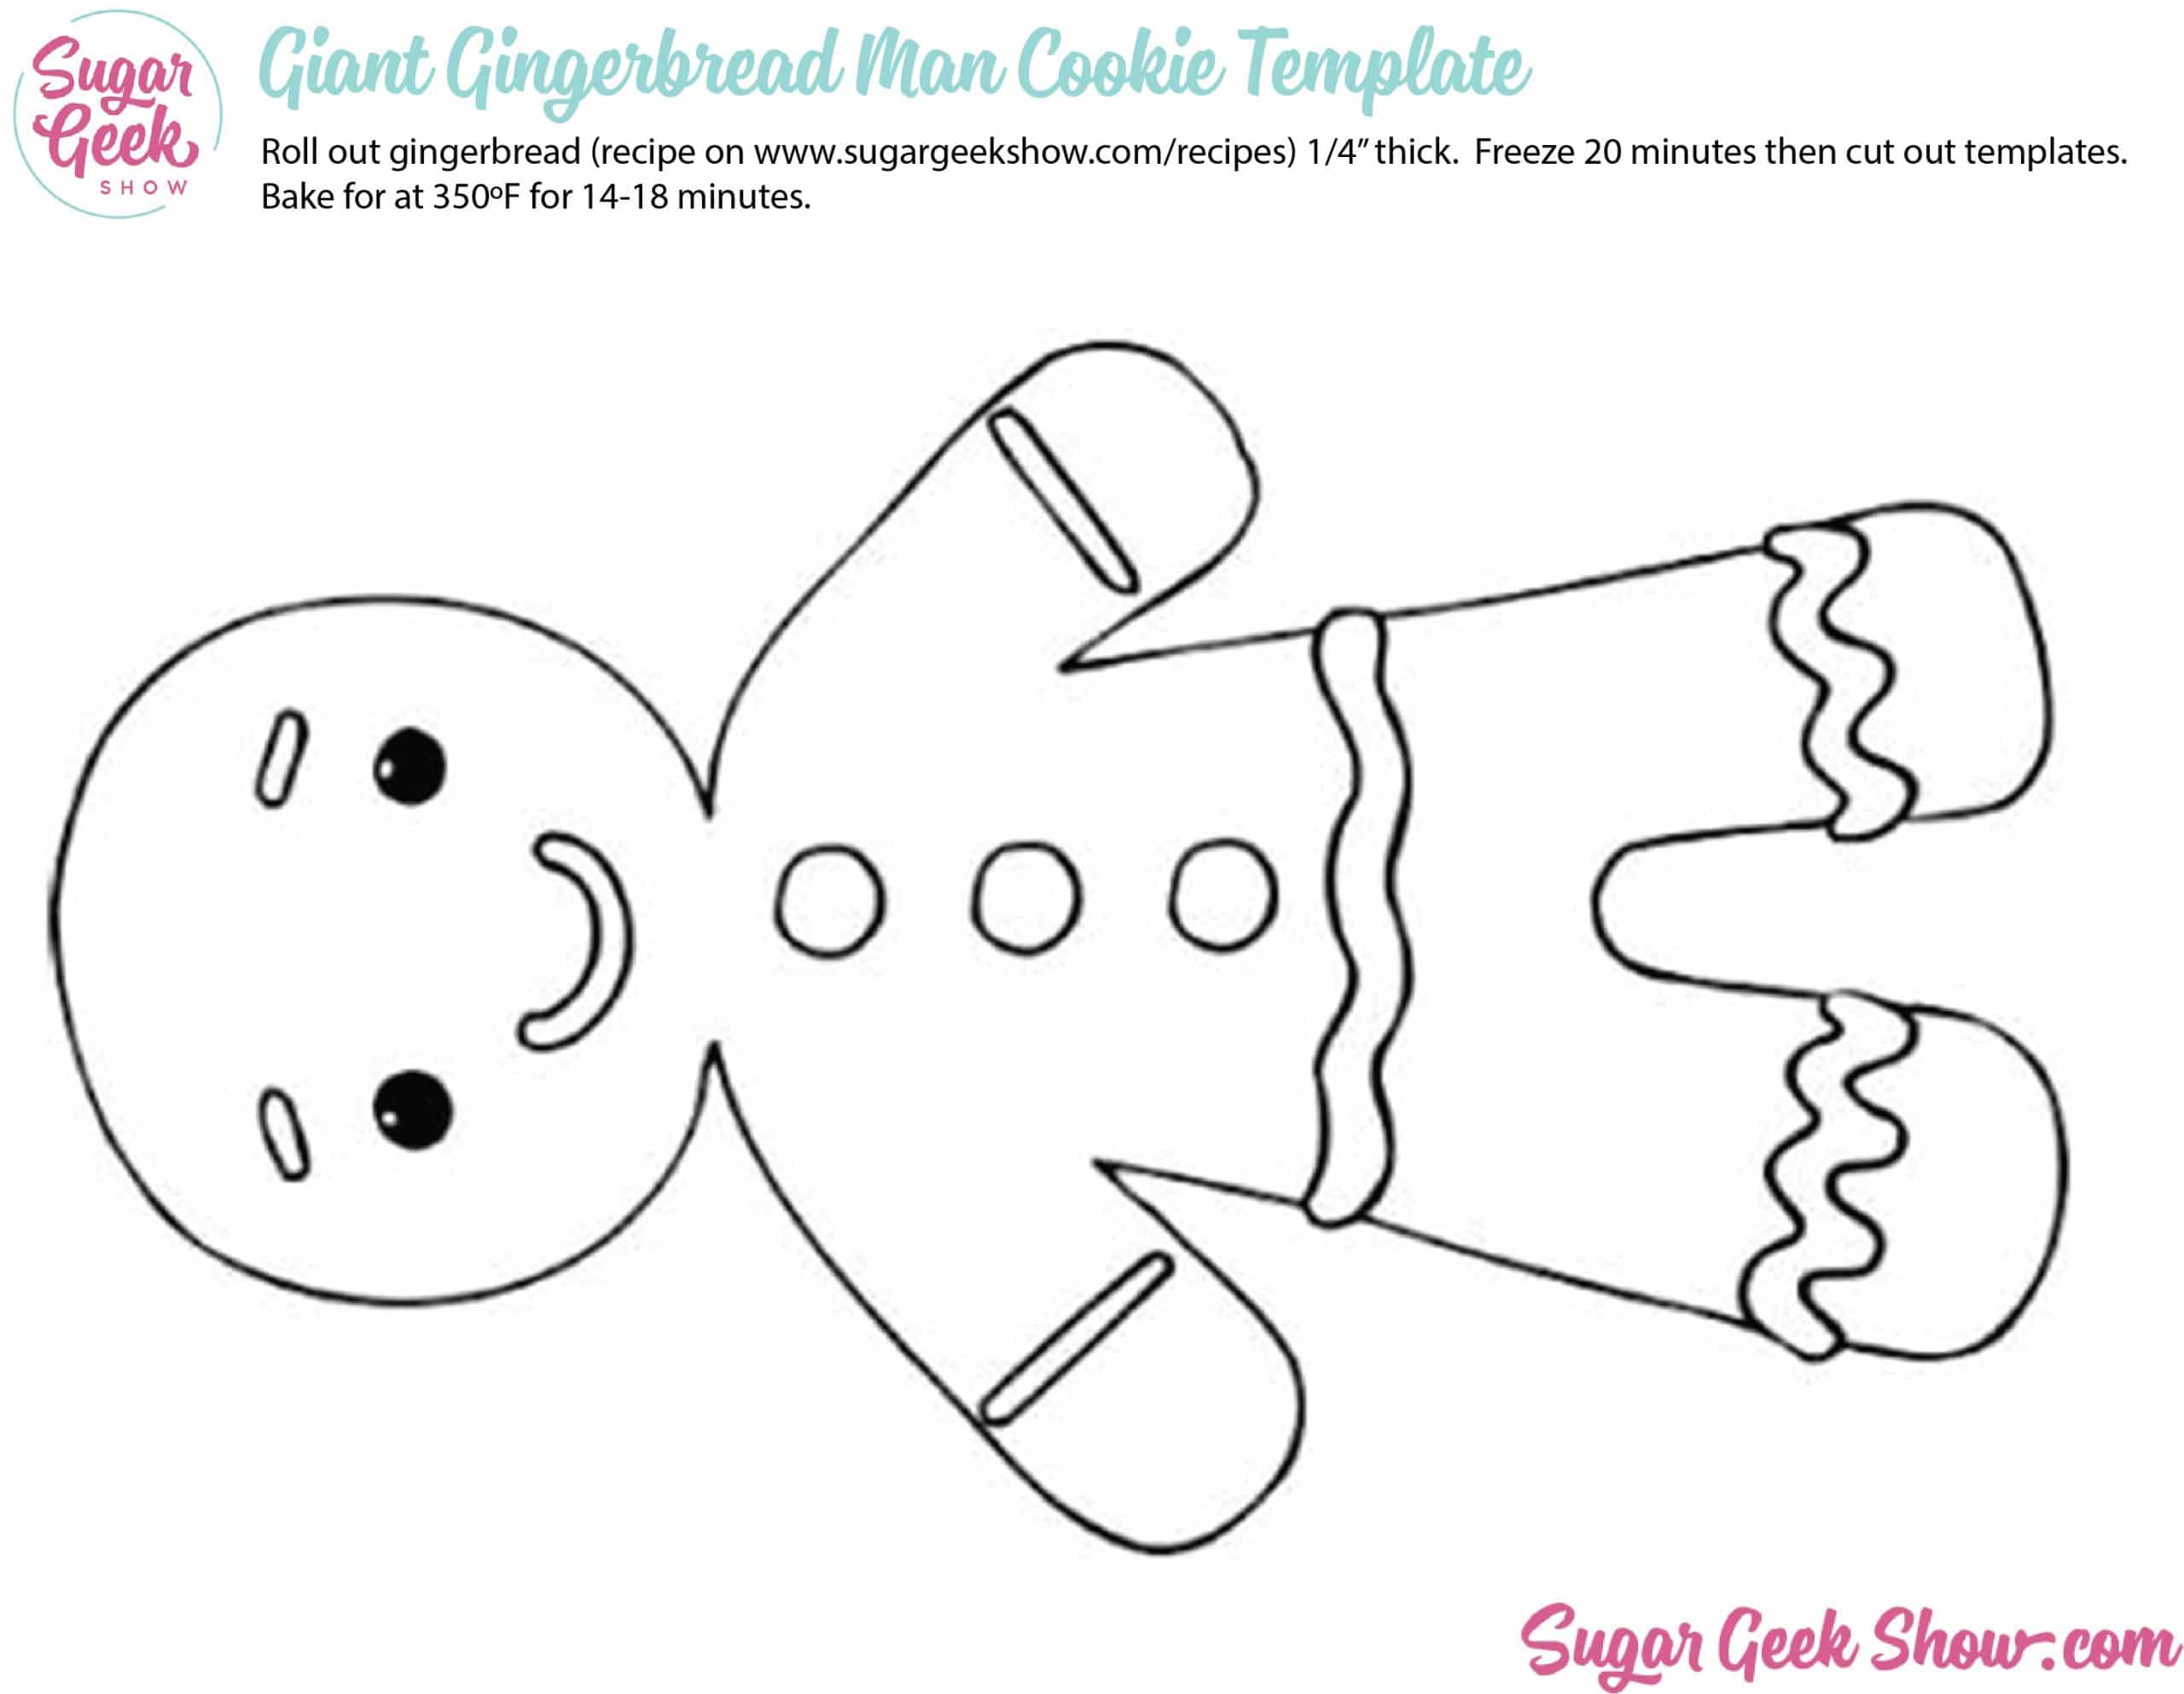 Giant Gingerbread Man Cookie + Template (Decorating Video) Sugar Geek